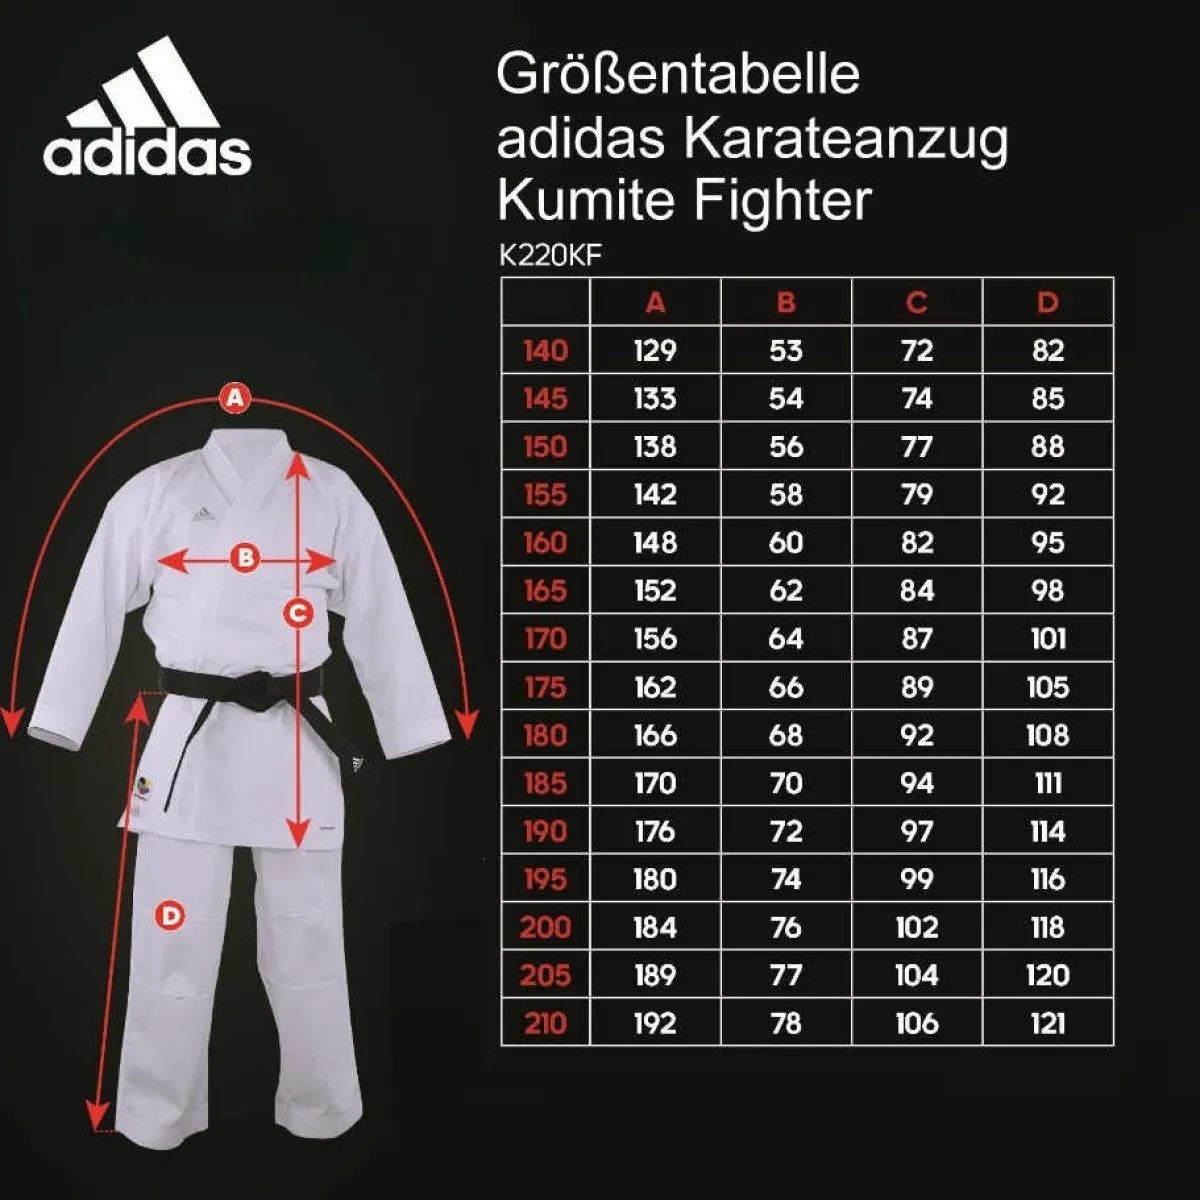 adidas Karateanzug Kumite Fighter